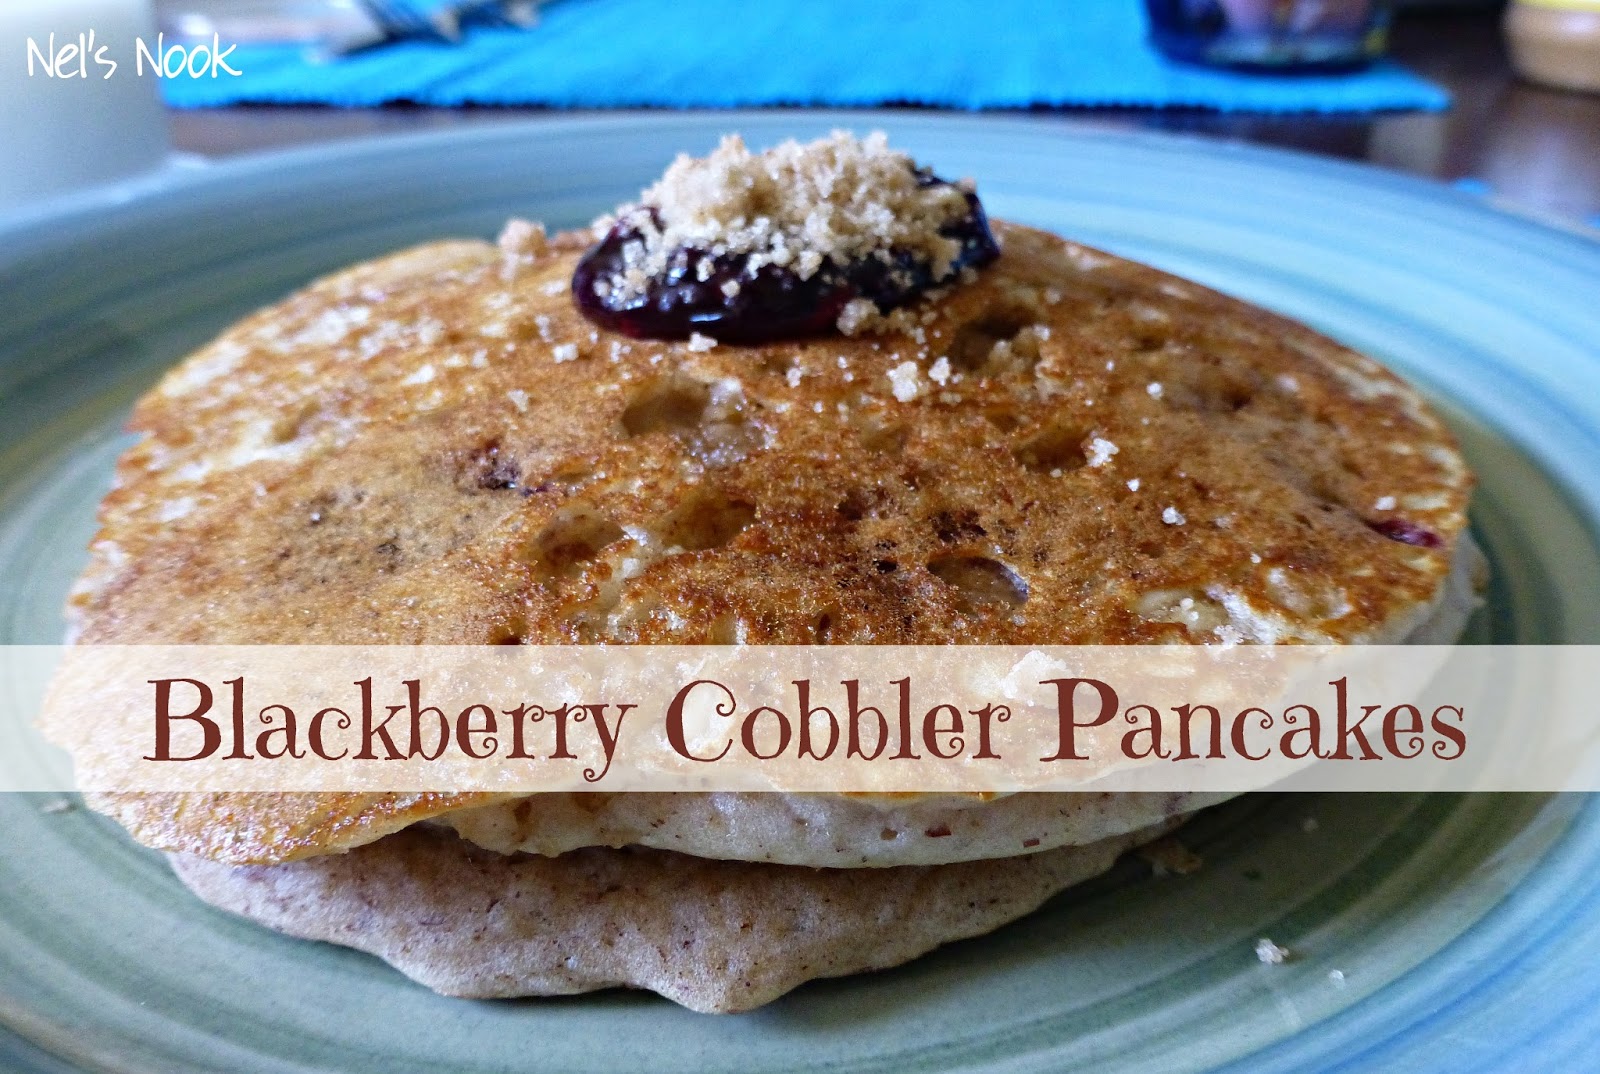 Sunday Fun with Blackberry Cobbler Pancakes